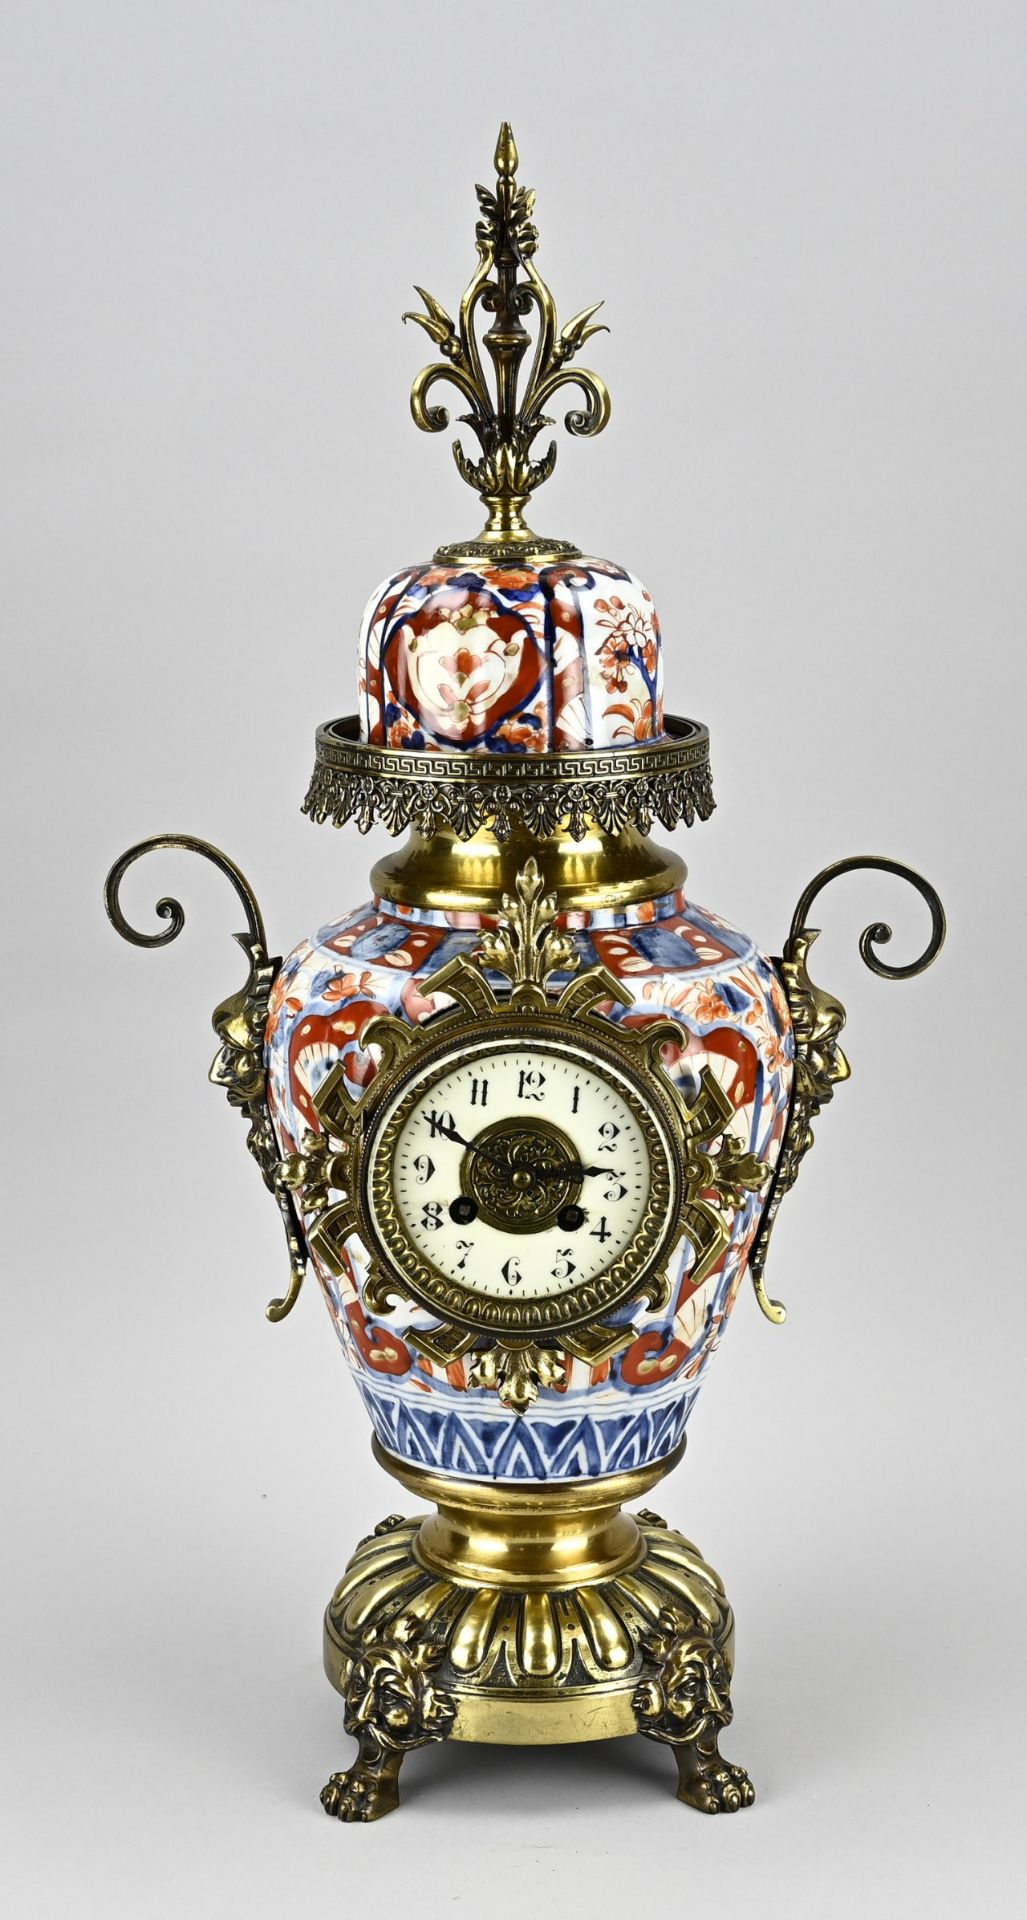 French mantel clock with Imari porcelain, H 59 cm.